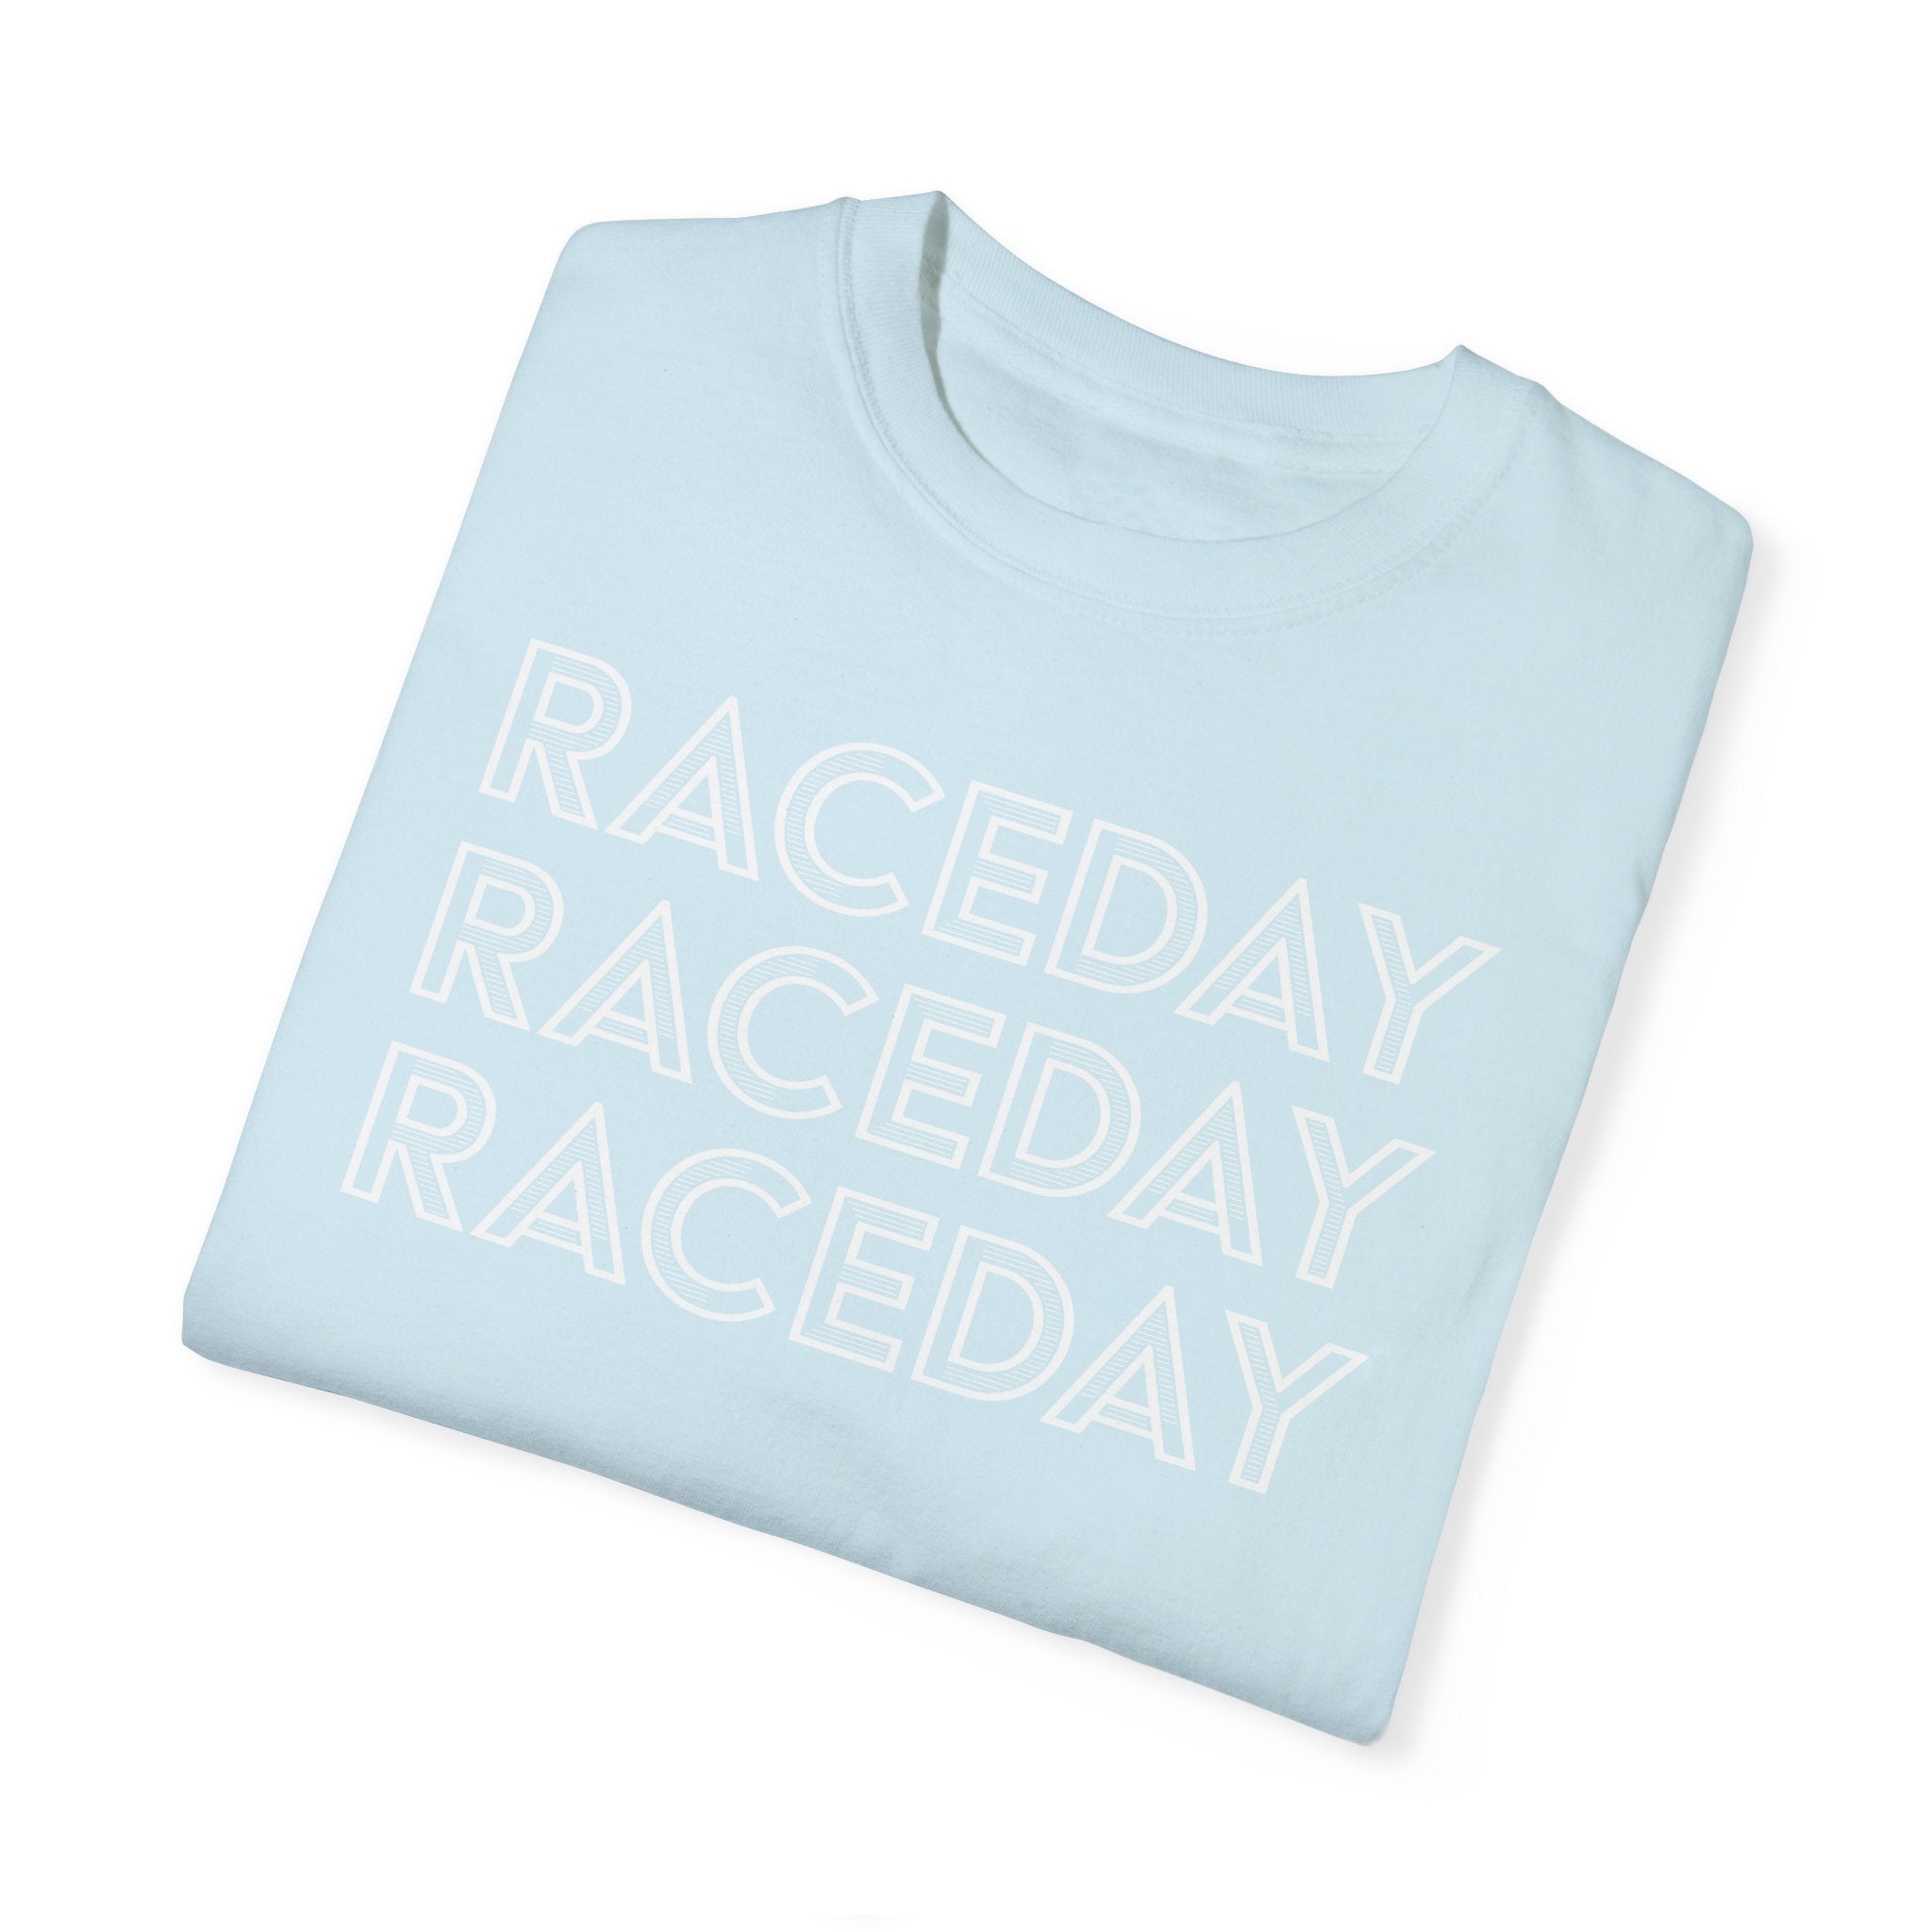 Retro Raceday Heavyweight Unisex Racing Tee